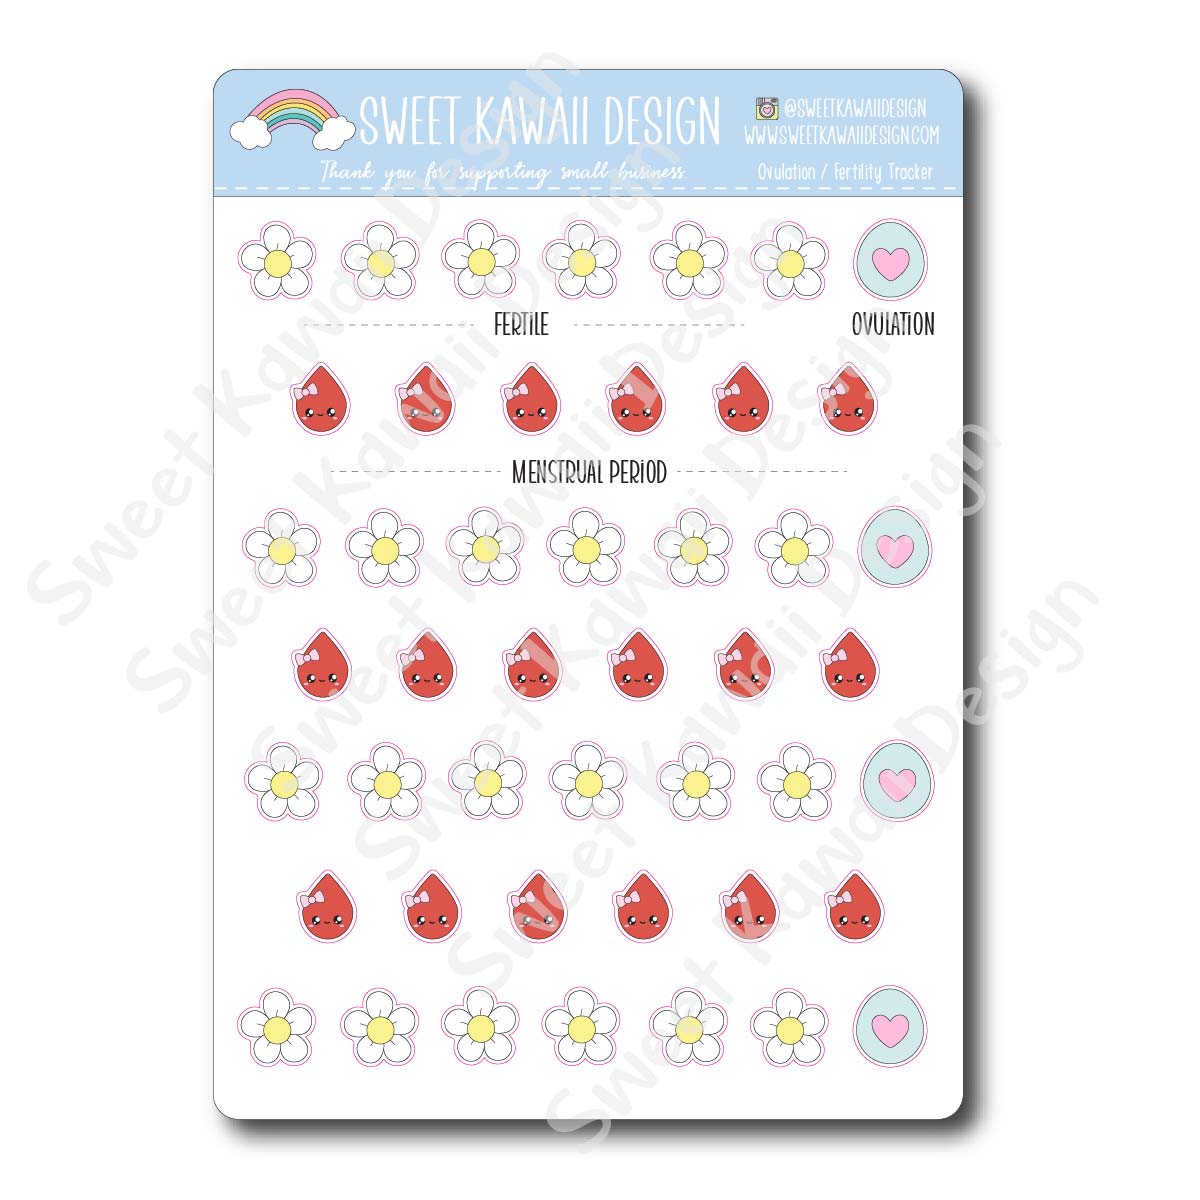 Kawaii Ovulation/Fertility Tracking Stickers